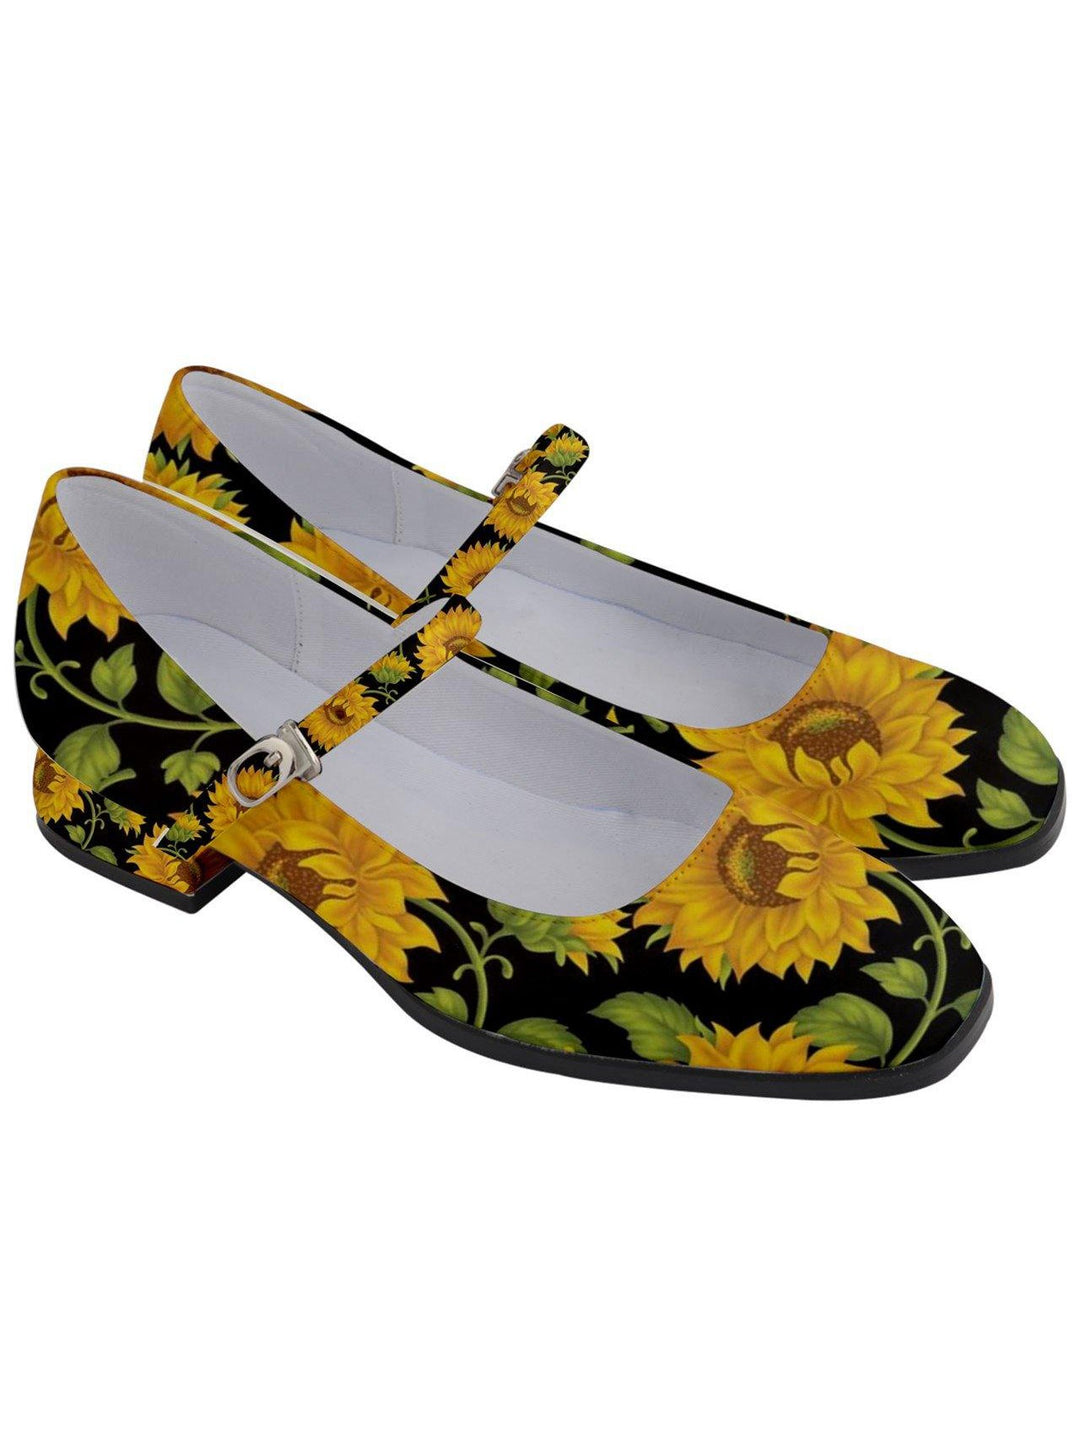 Sunflowers Women's Mary Jane Shoes